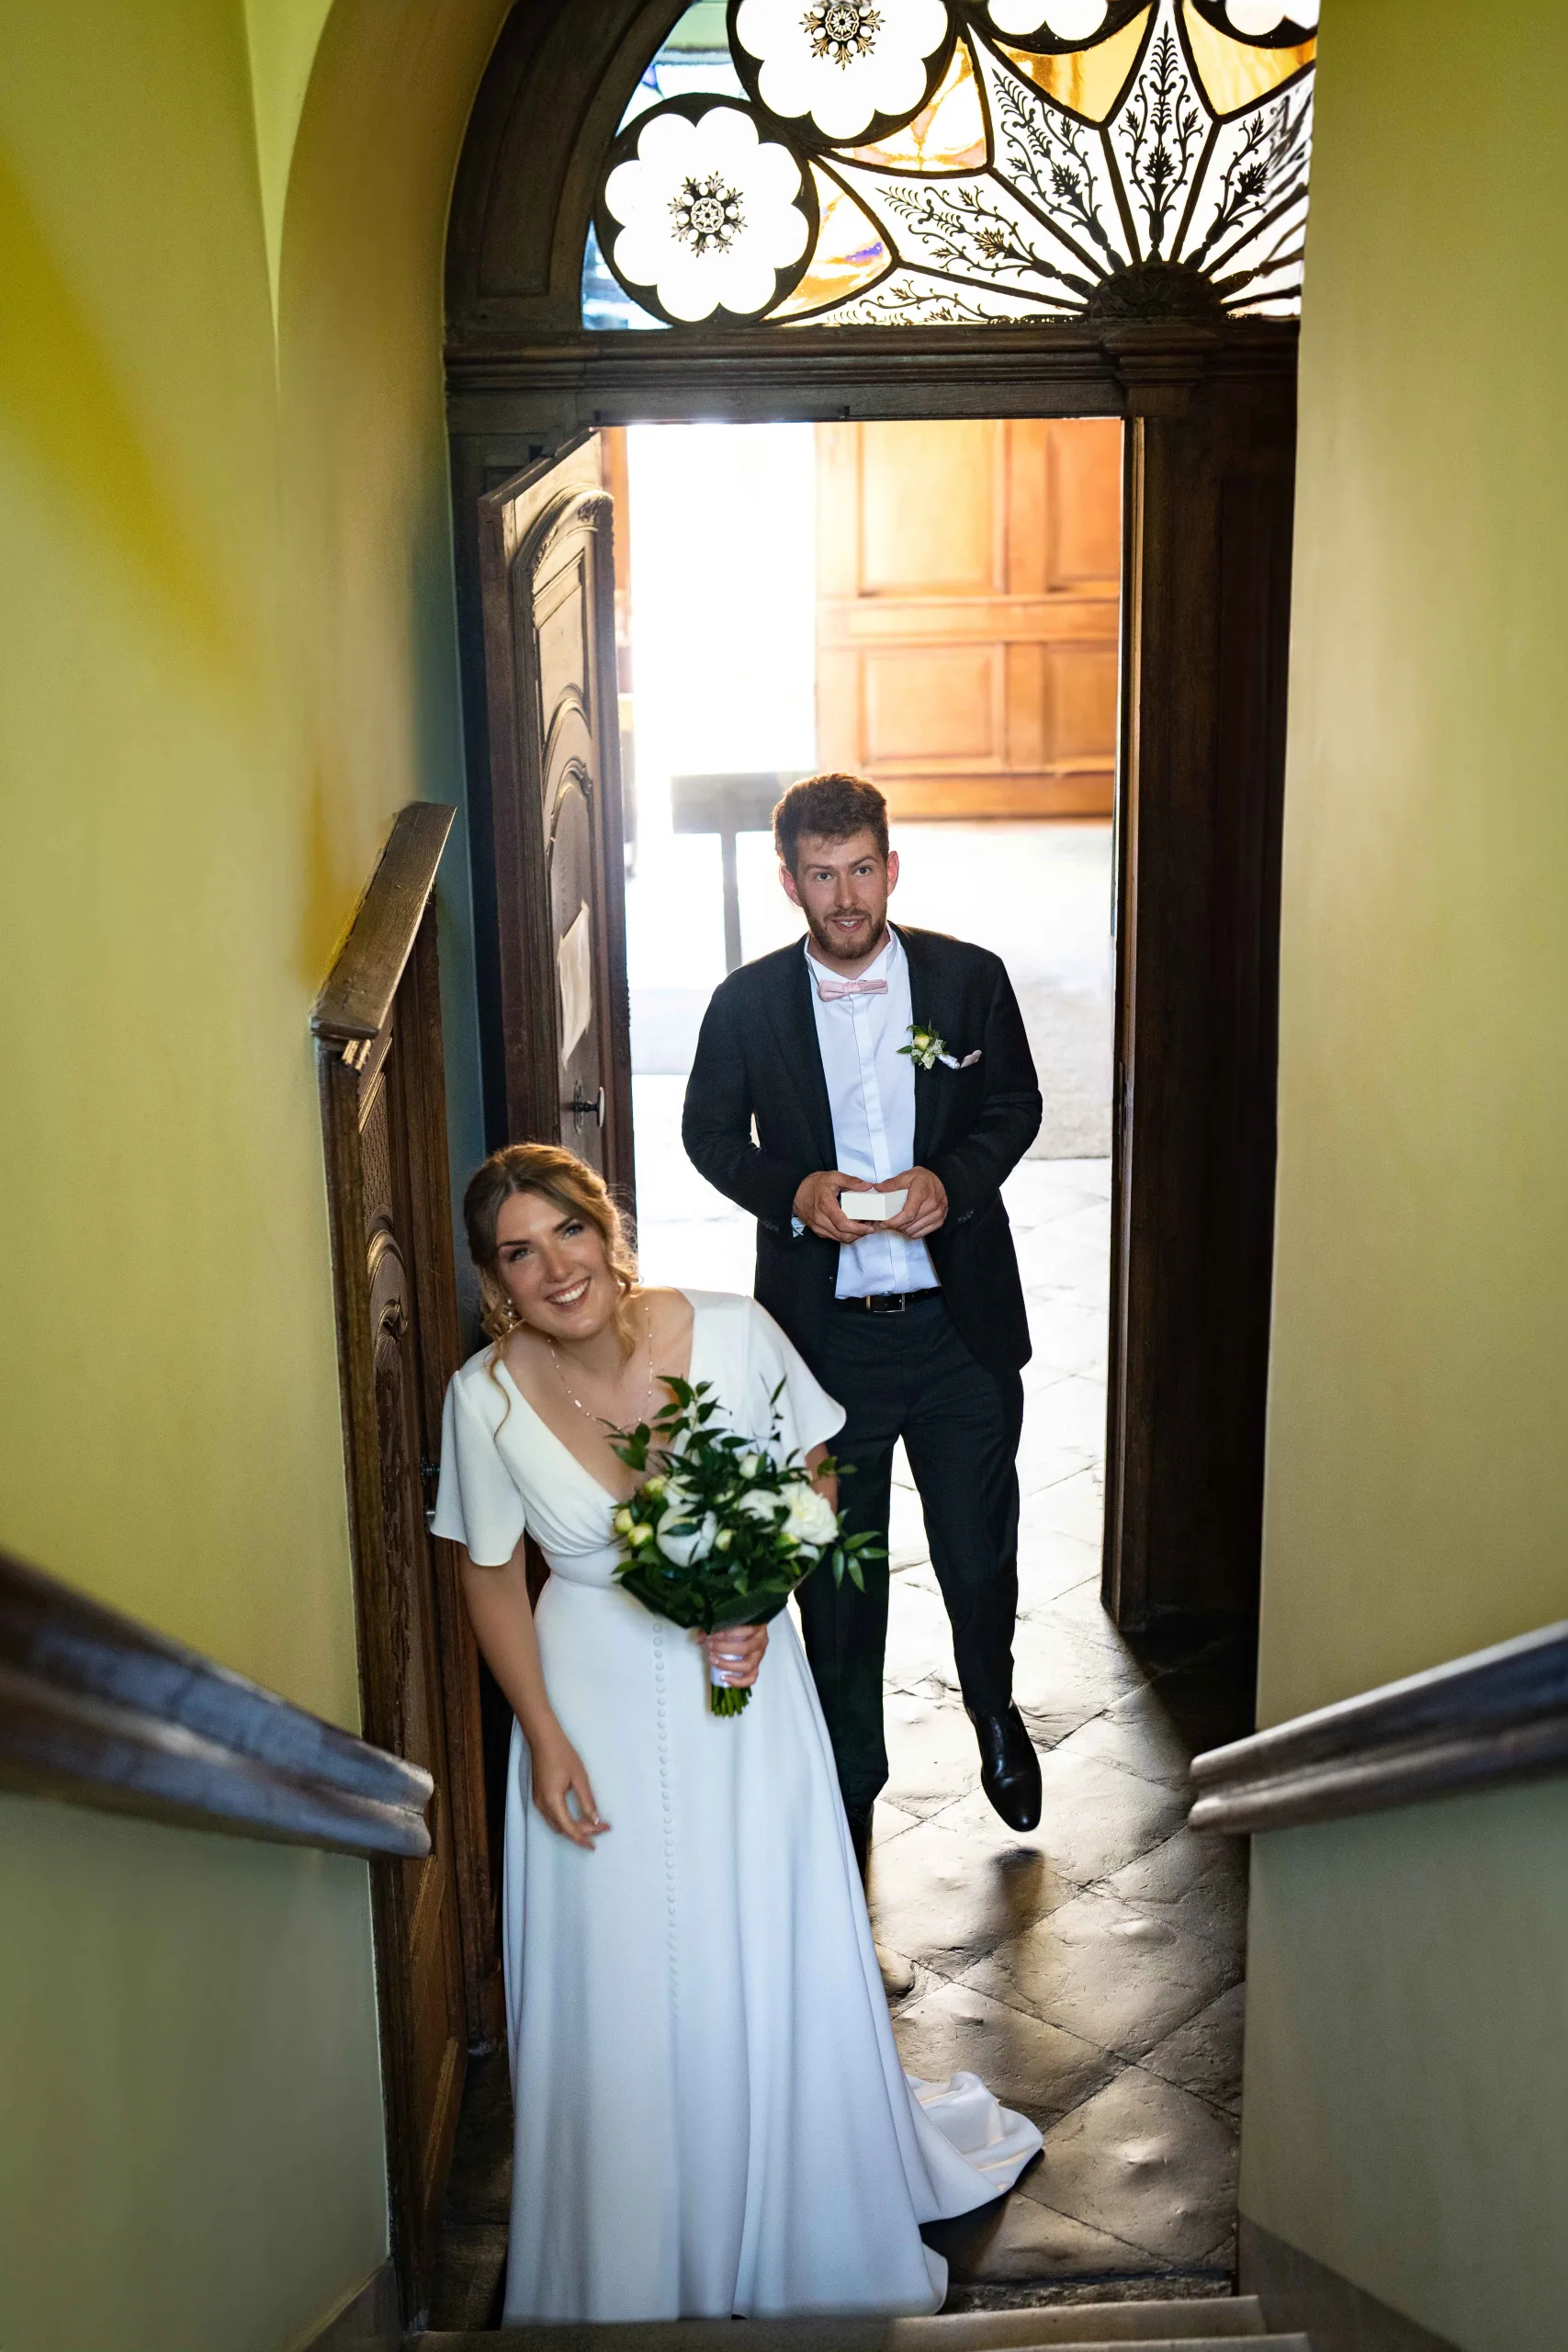 Luxembourg civil wedding photographer